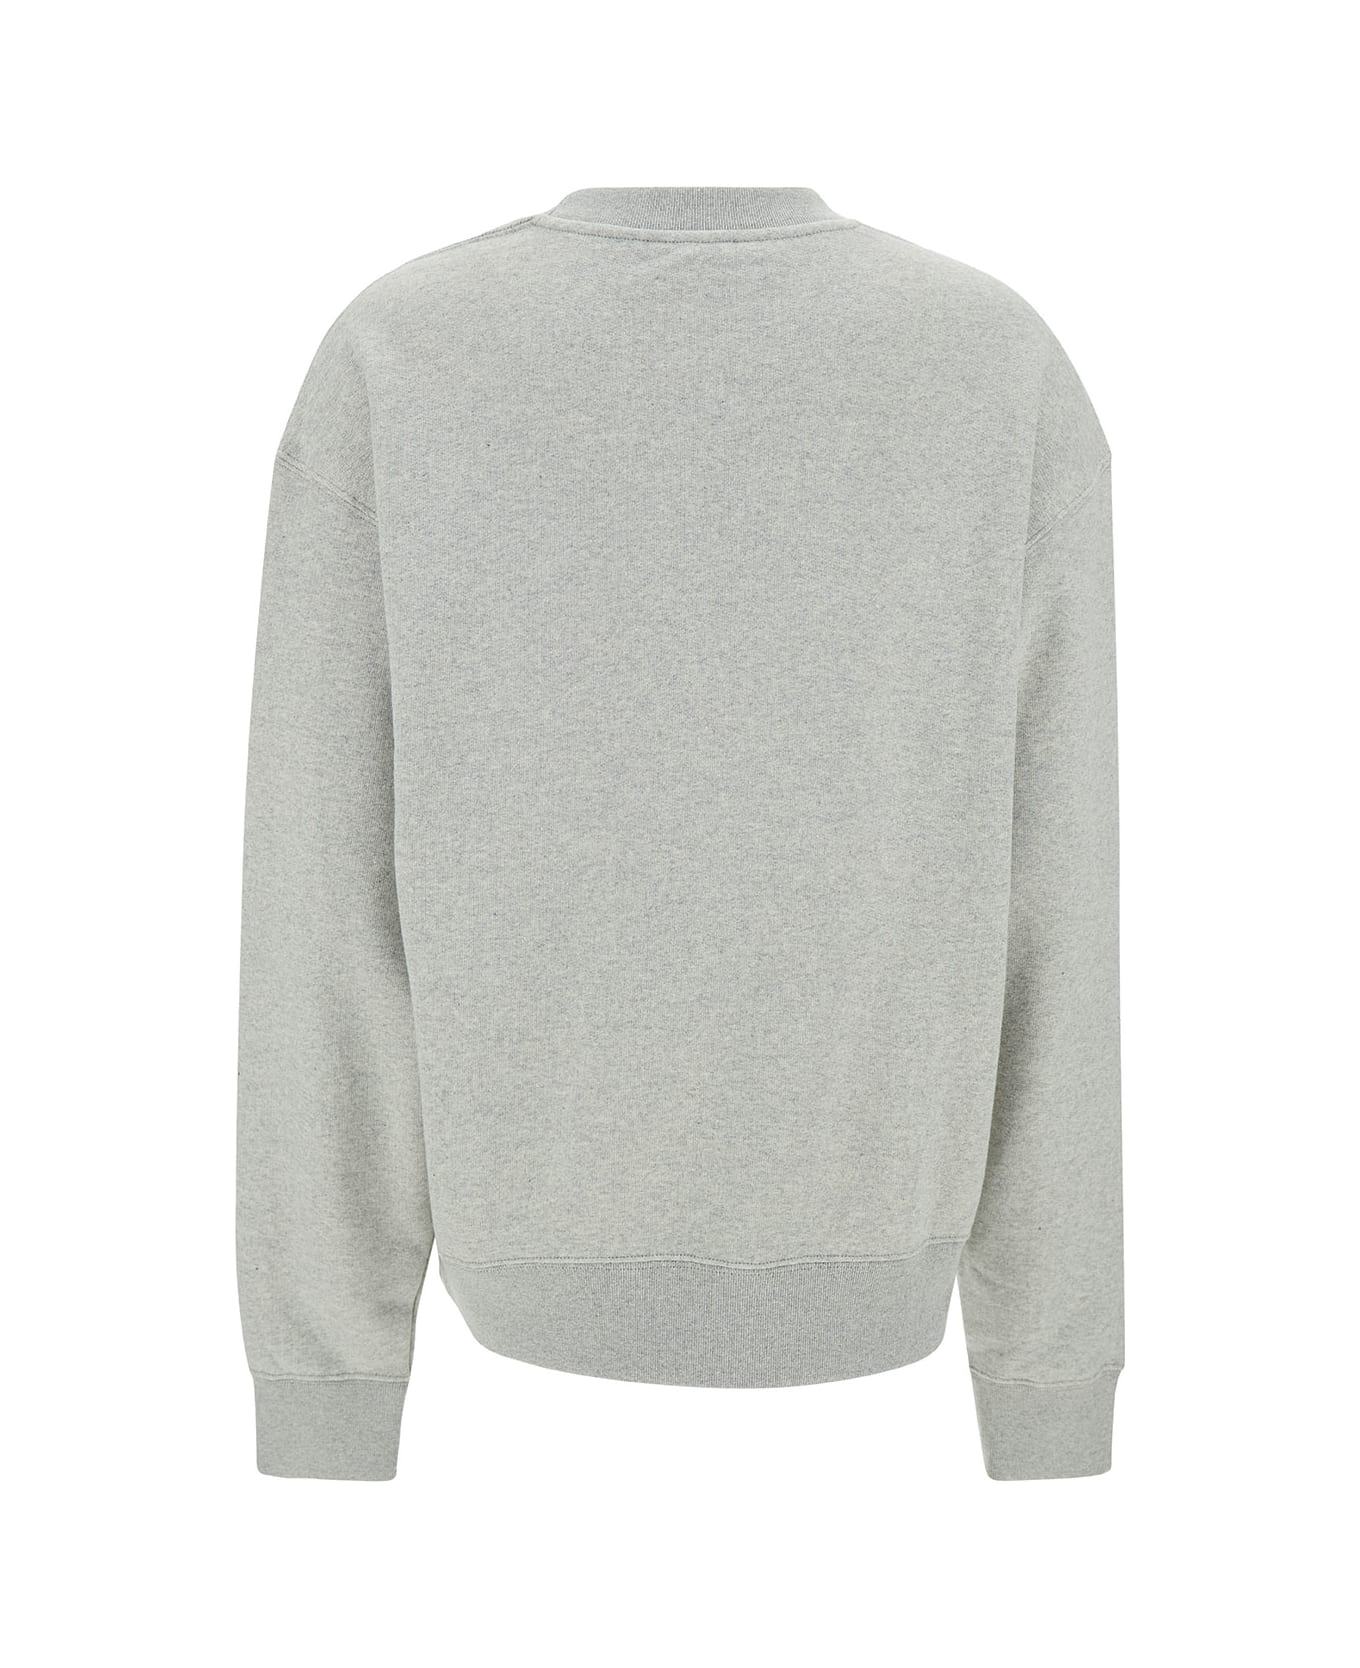 Jil Sander Grey Crewneck Sweatshirt With Logo Lettering Print In Stretch Cotton Woman - Grey